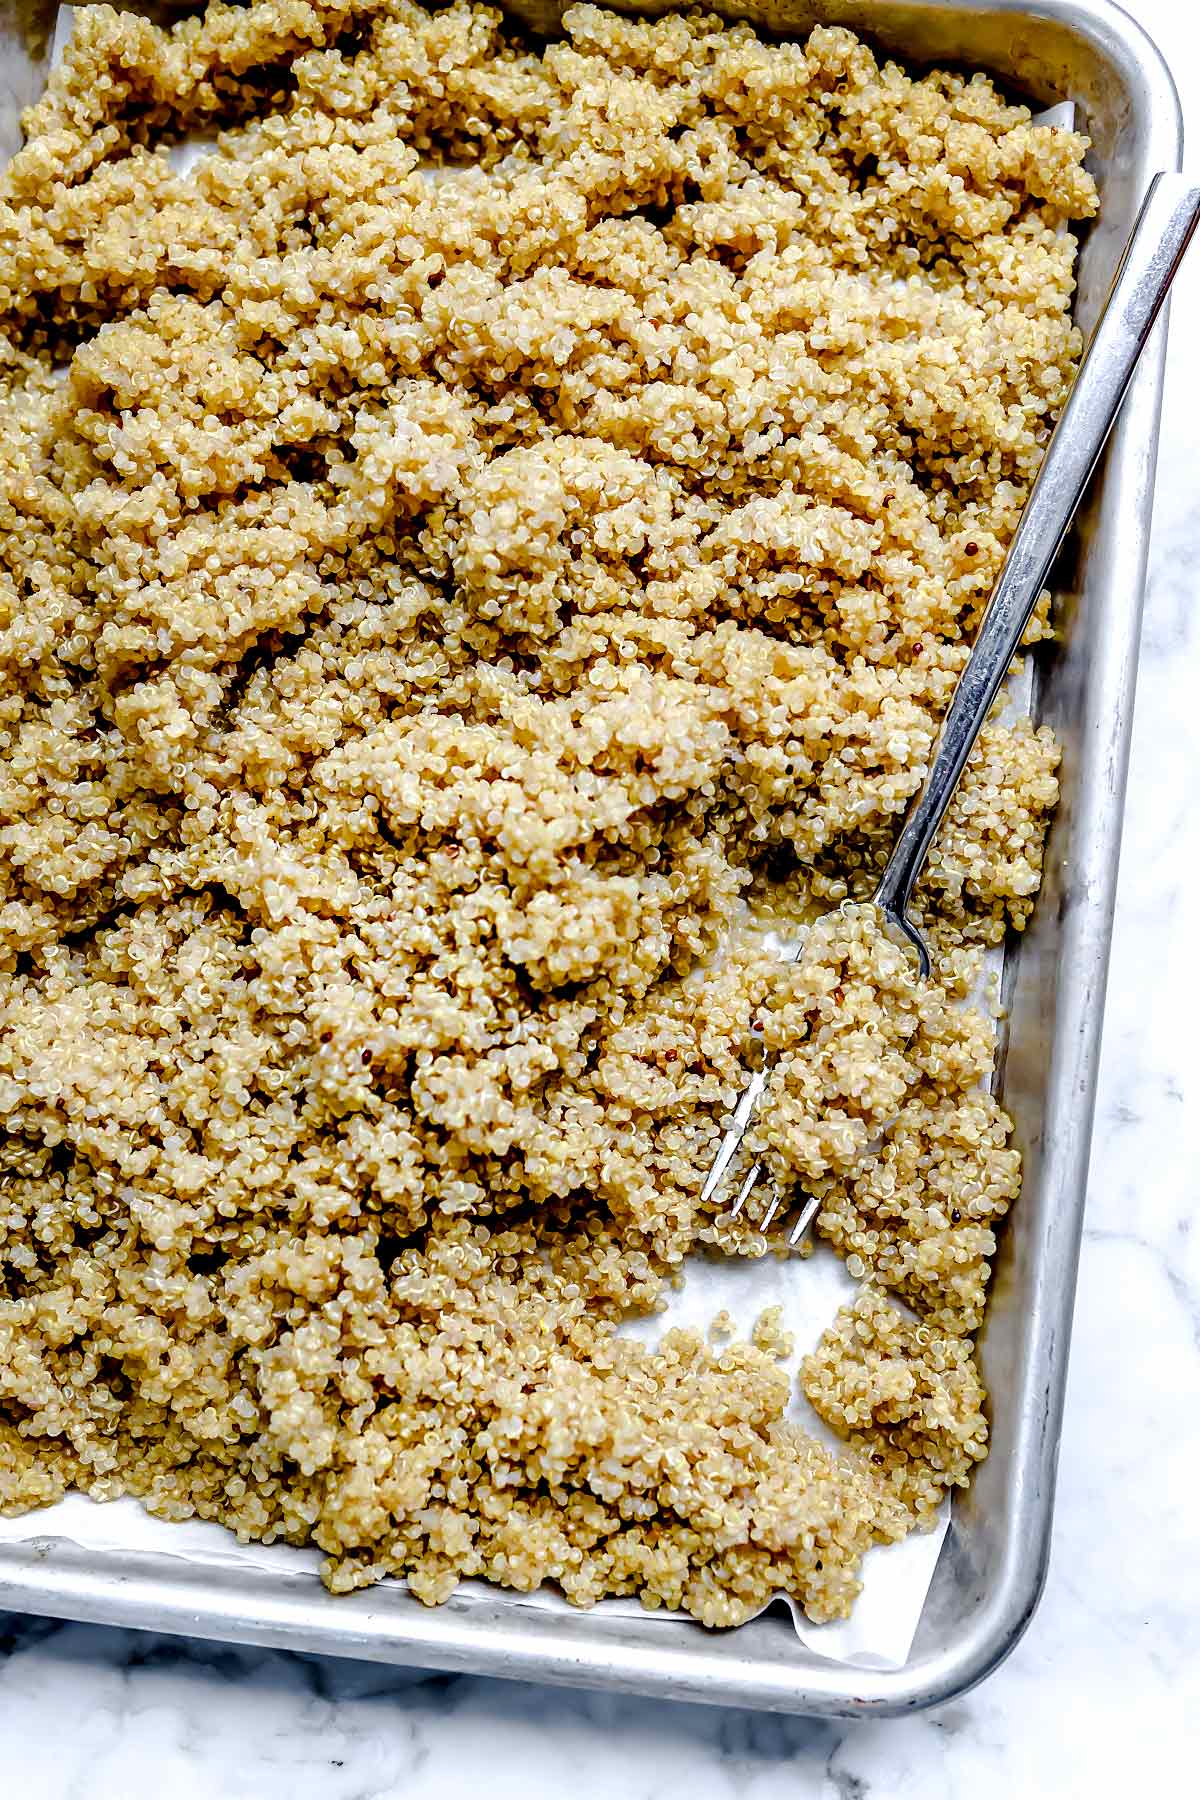 How to Cook Quinoa - Perfectly Fluffy! + Quinoa Recipes